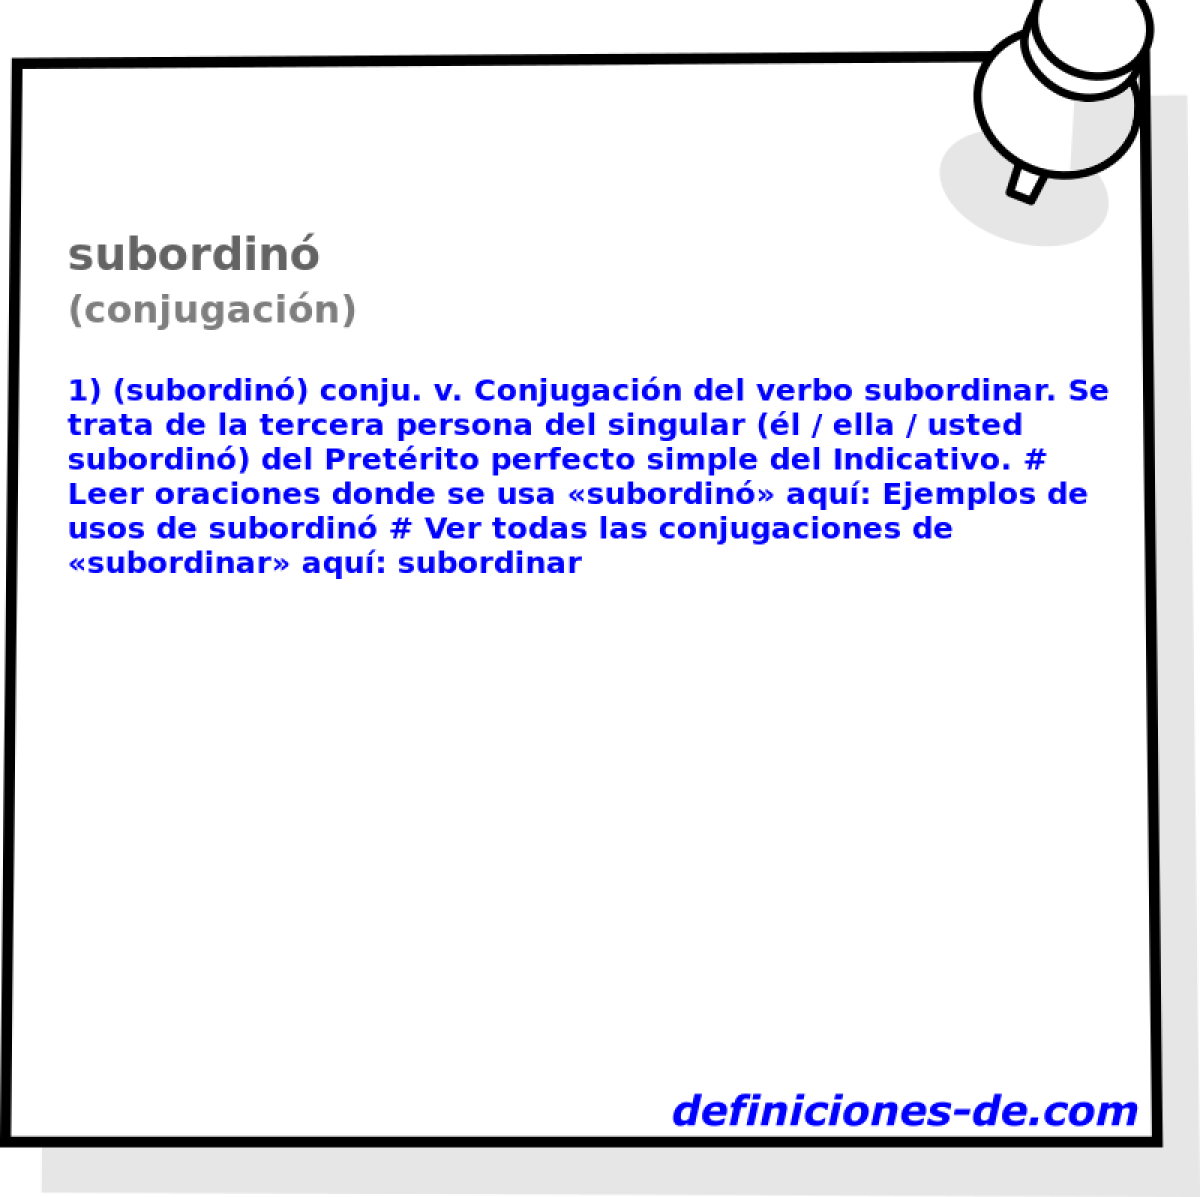 subordin (conjugacin)